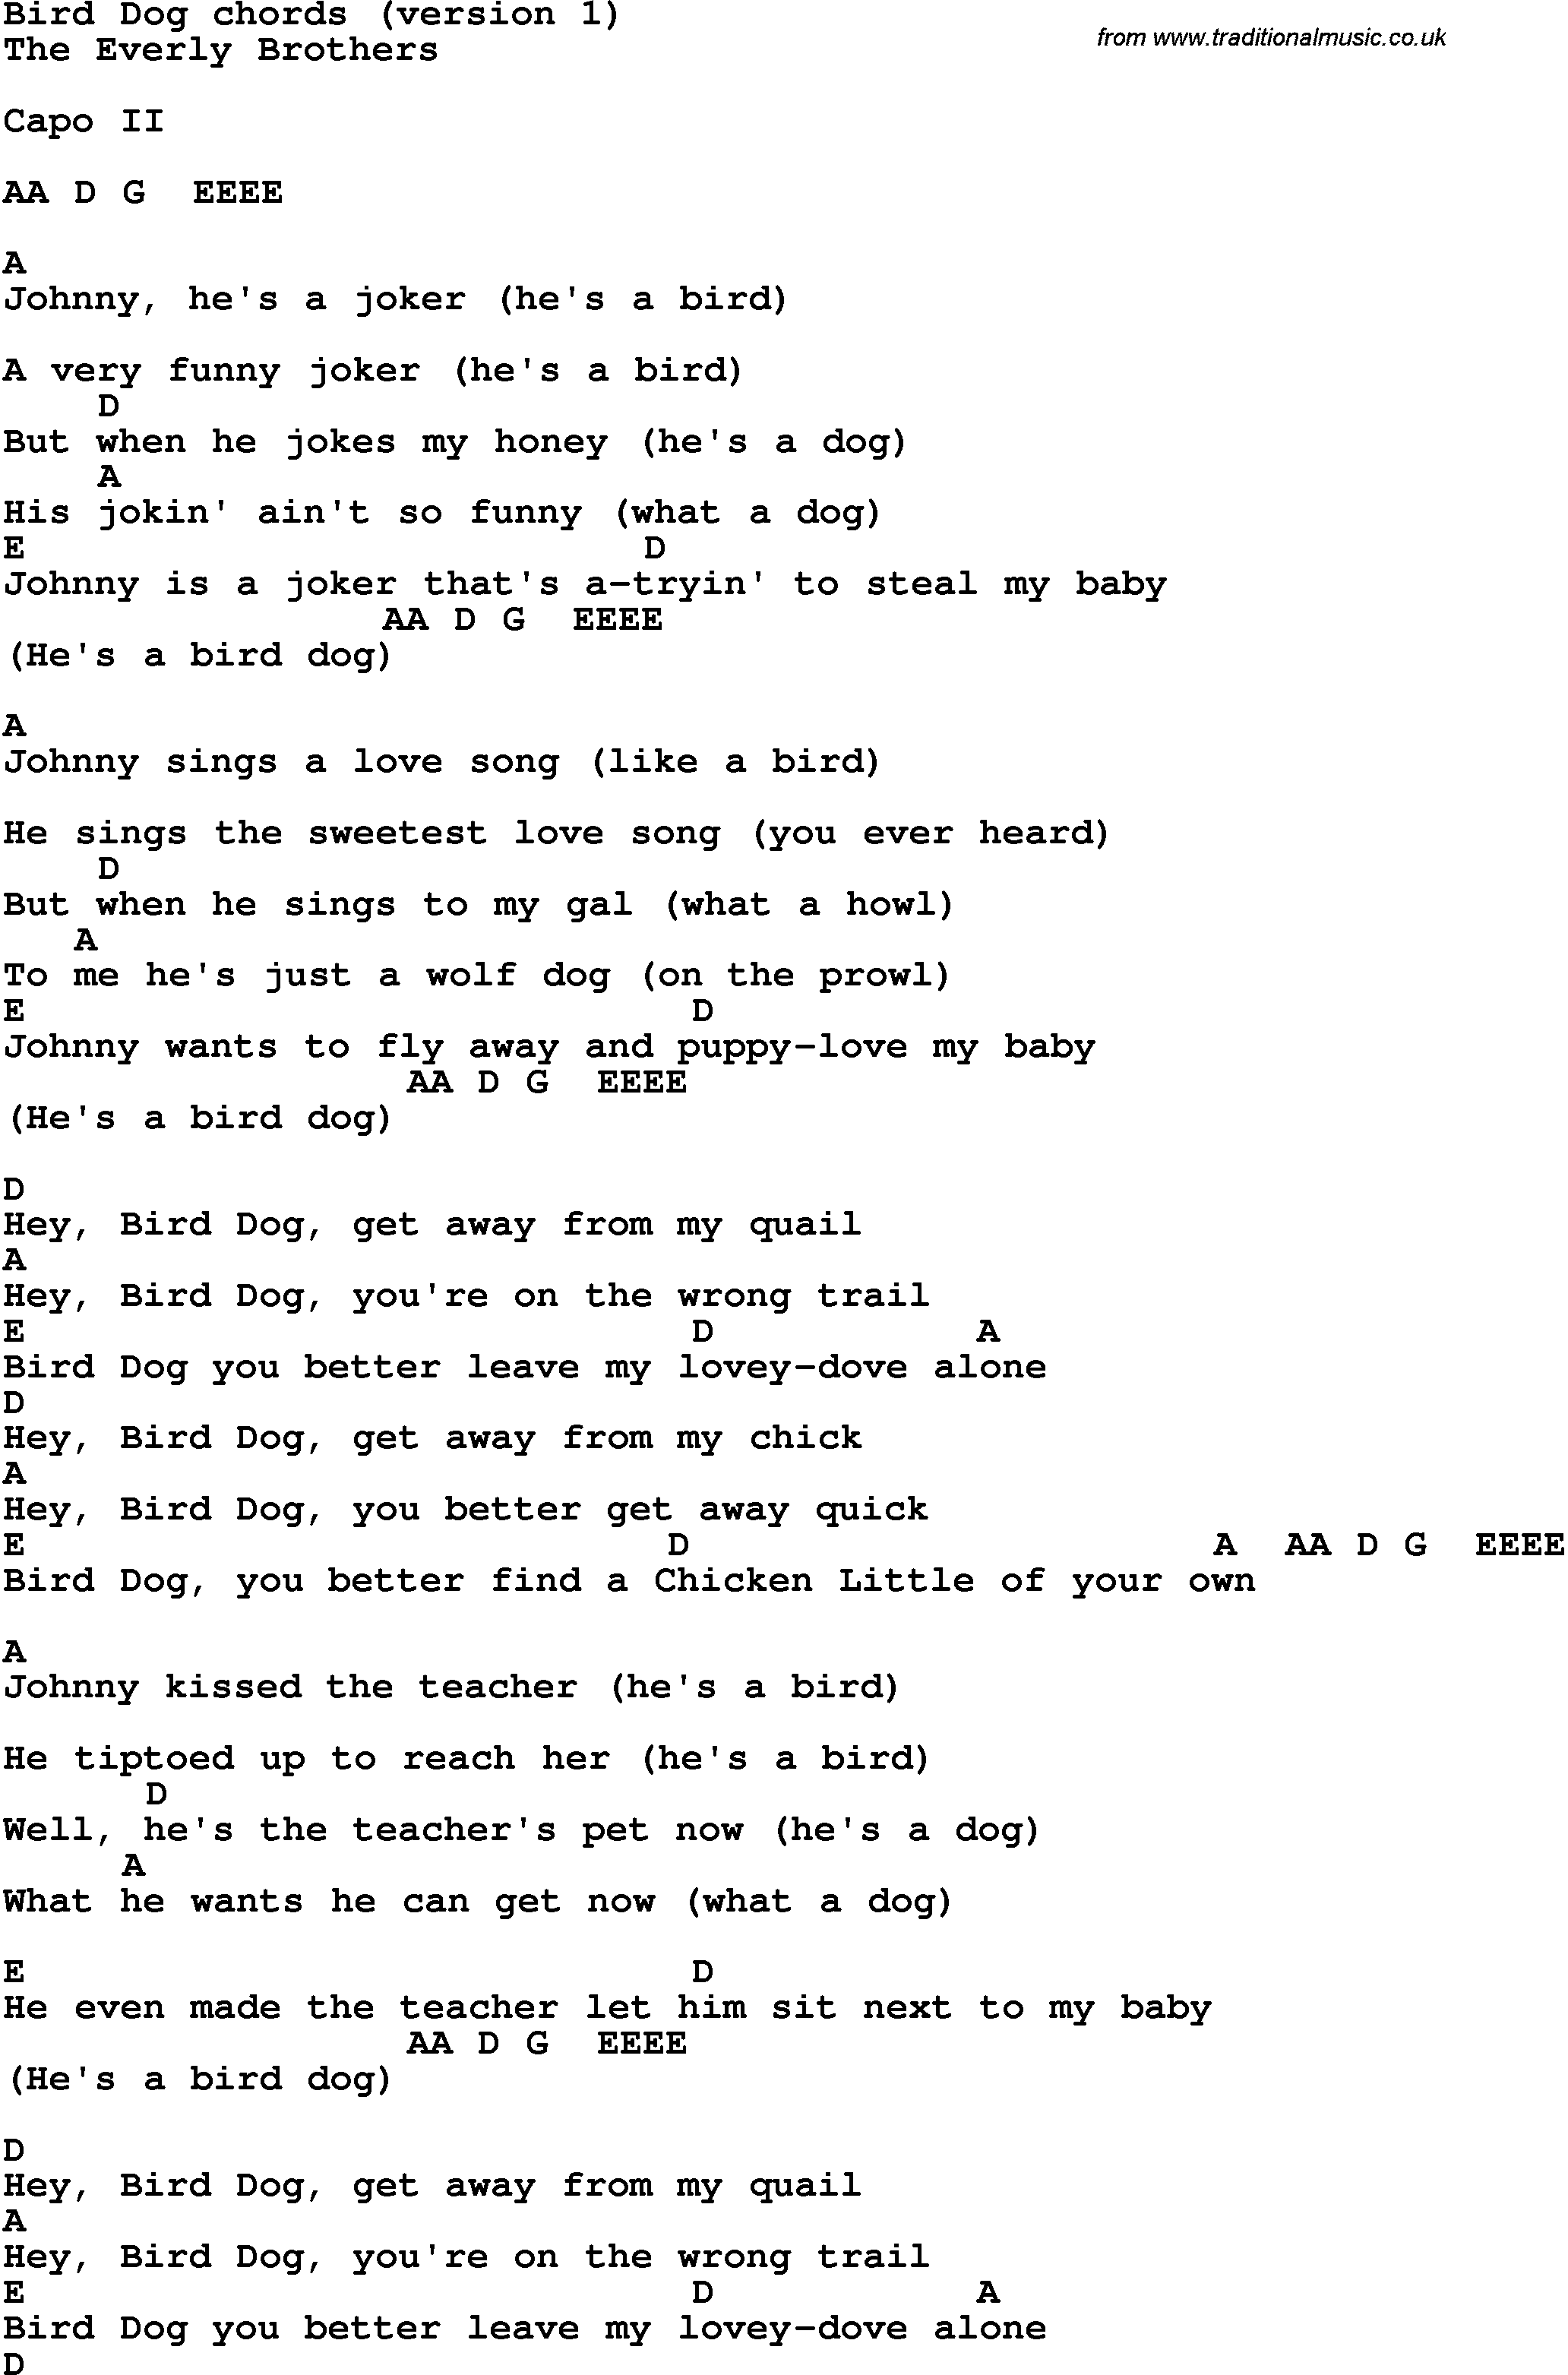 Song Lyrics with guitar chords for Bird Dog